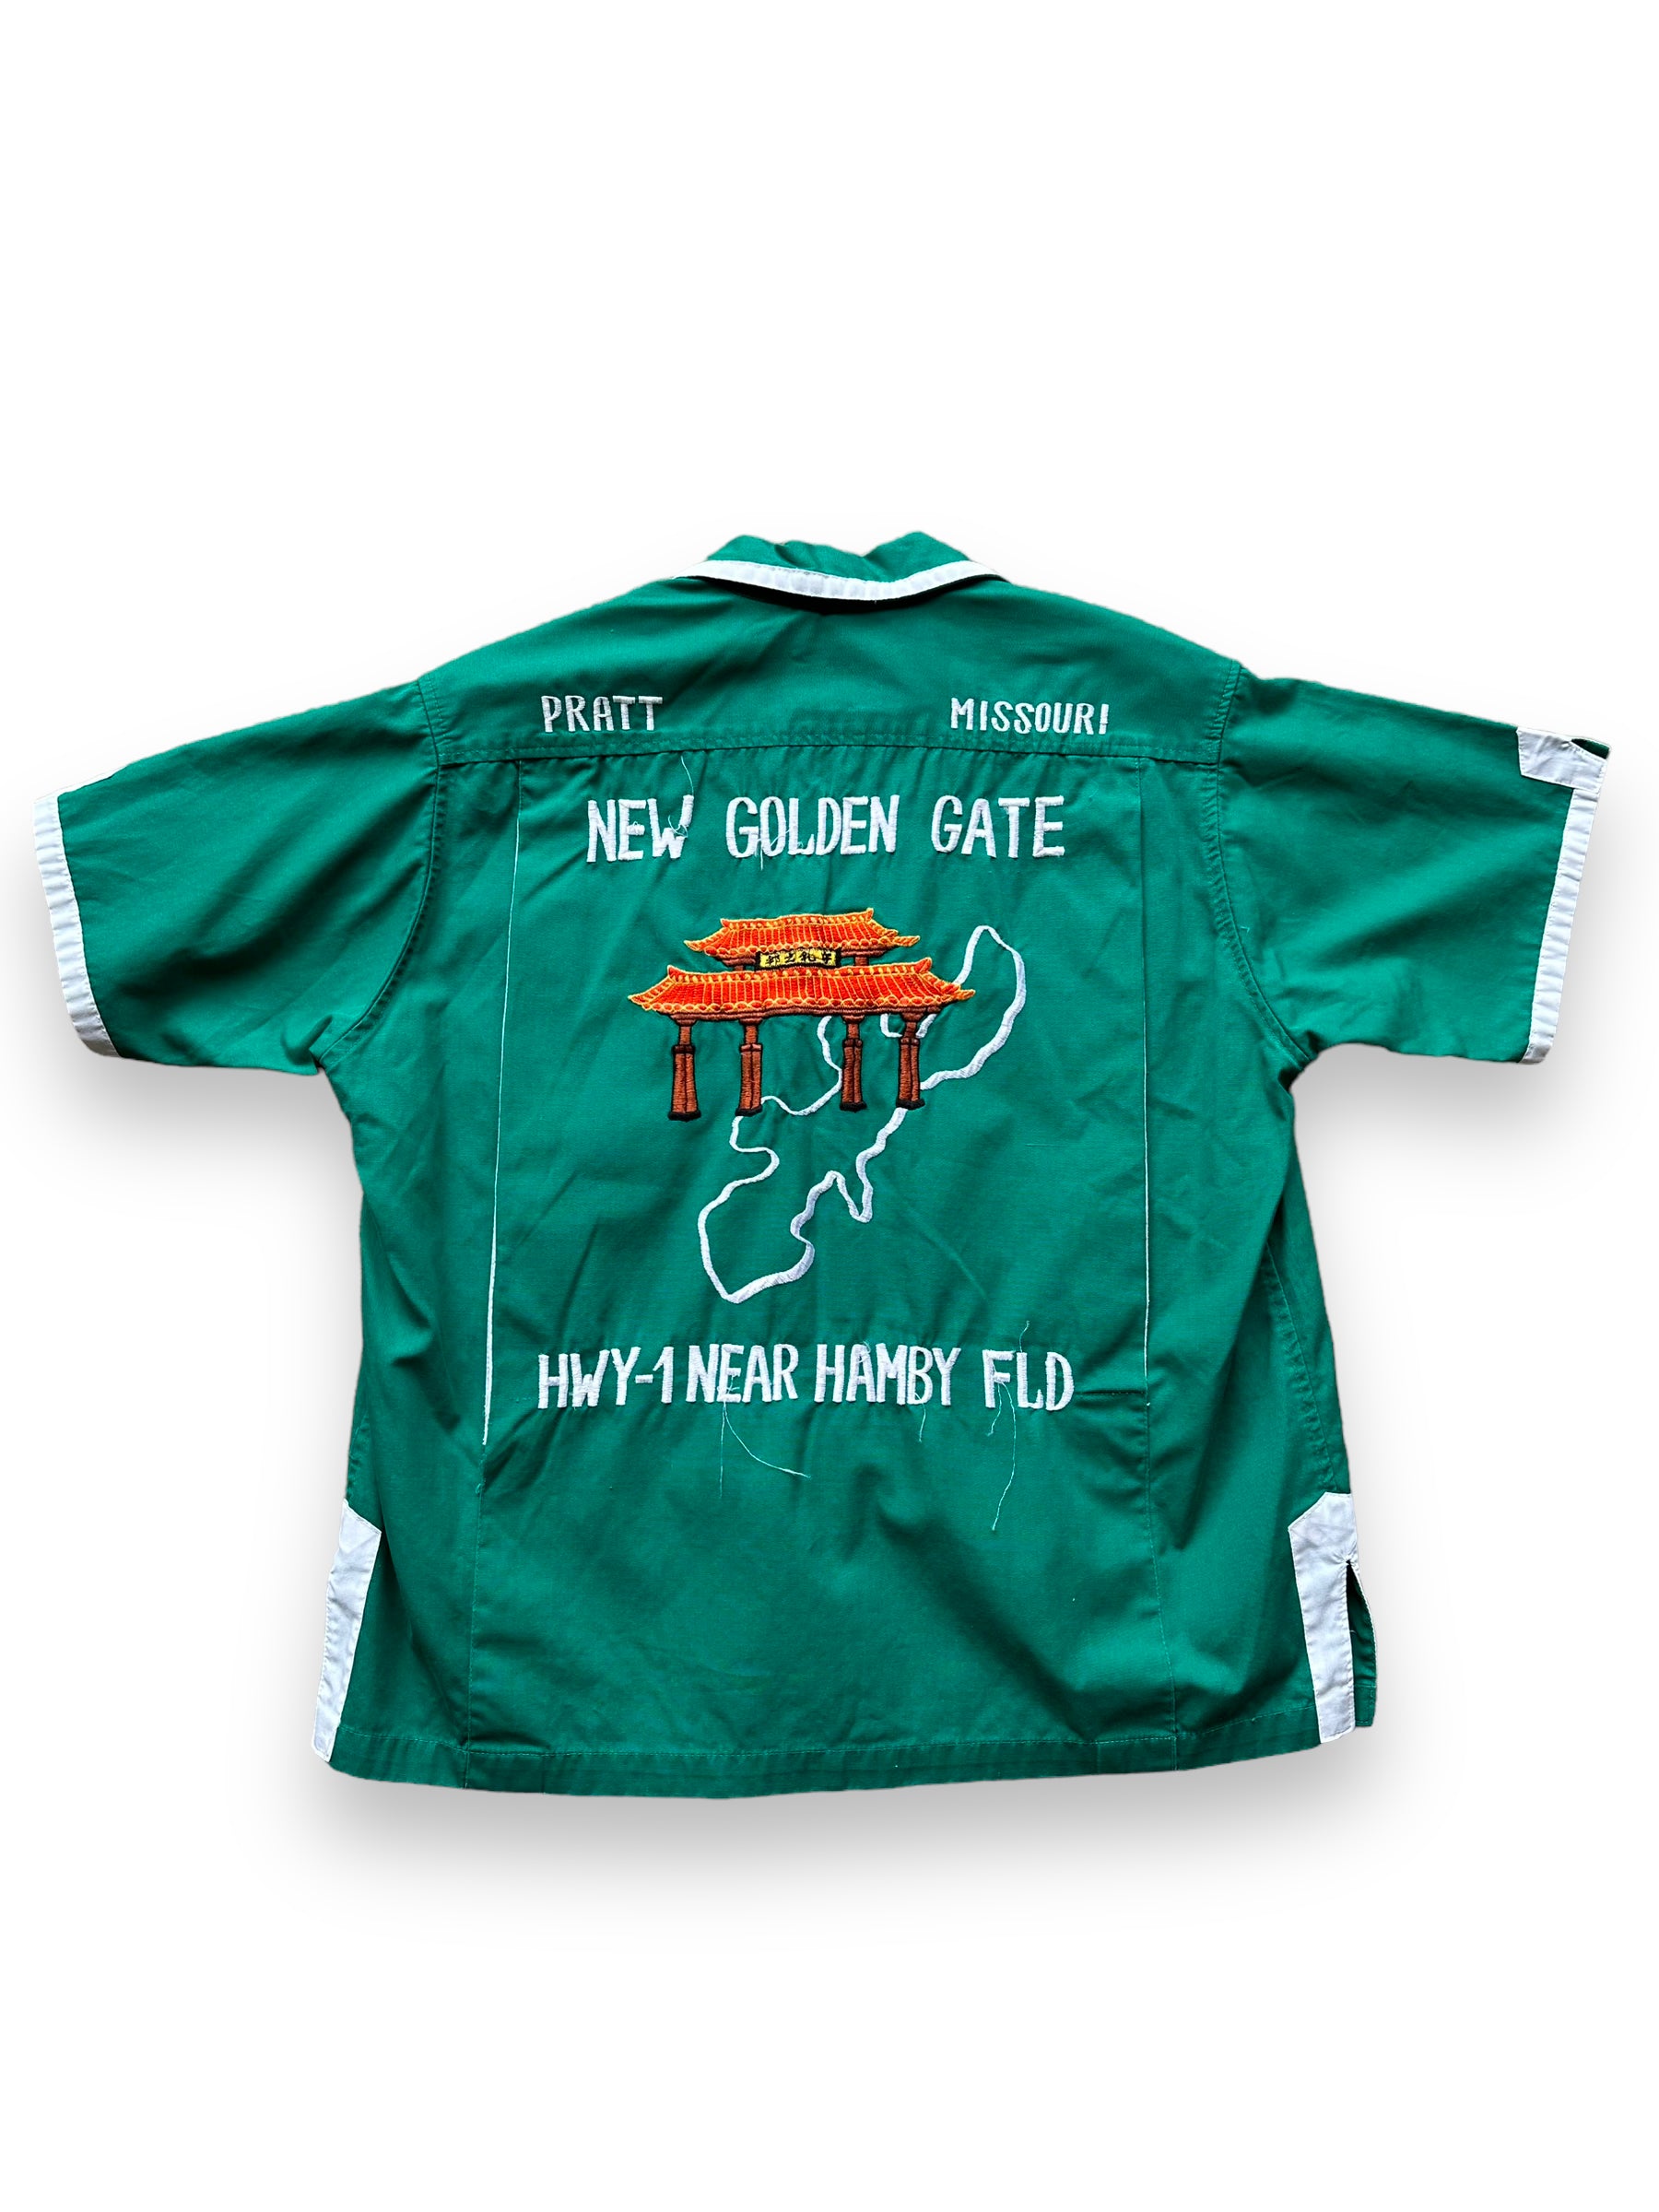 Back of Vintage "New Golden Gate" Bowling Shirt SZ M | Vintage Bowling Shirt Seattle | Barn Owl Vintage Seattle